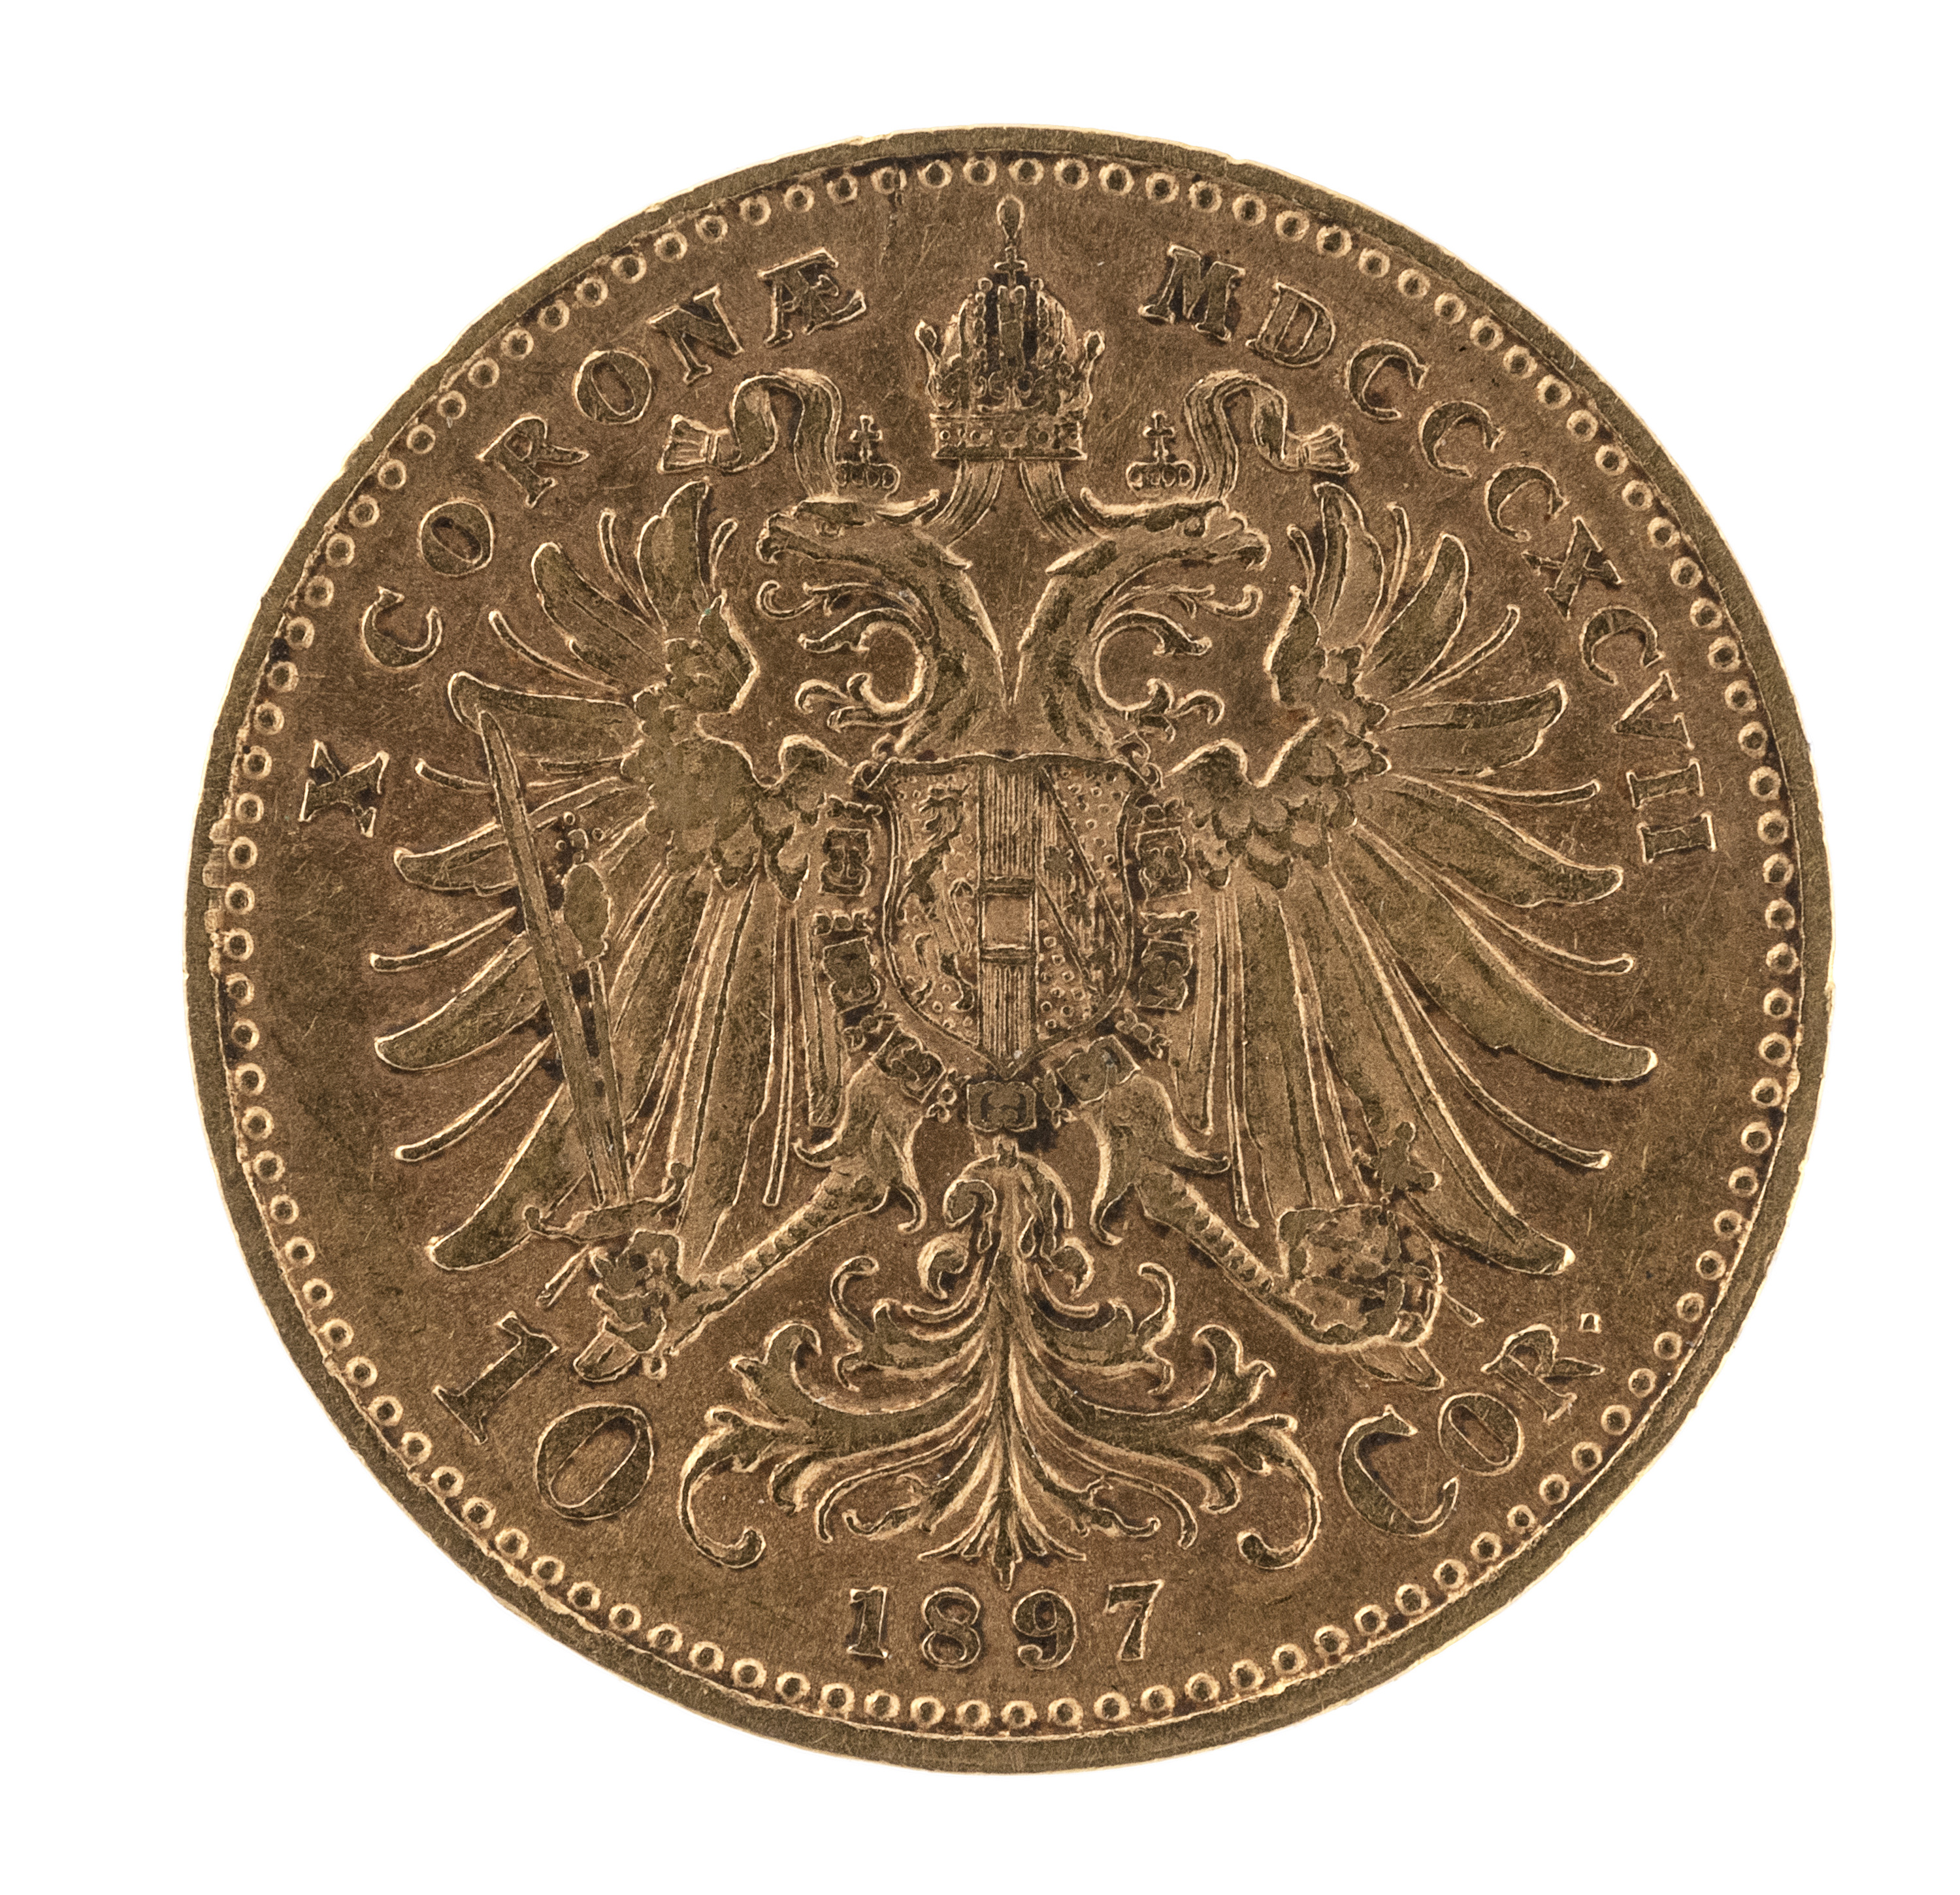 COIN OF TEN CROWNS AUSTRIA FRANZ JOSEPH I 1897 - Image 2 of 2